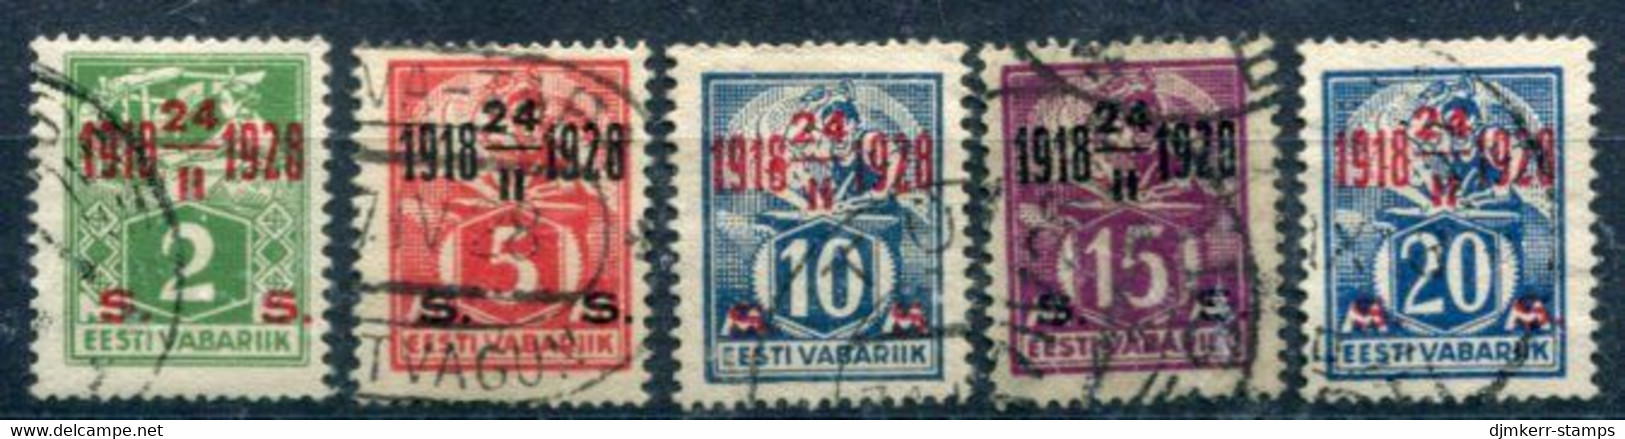 ESTONIA 1928 10th Anniversary Of Independence Used.  Michel 68-72 - Estonia